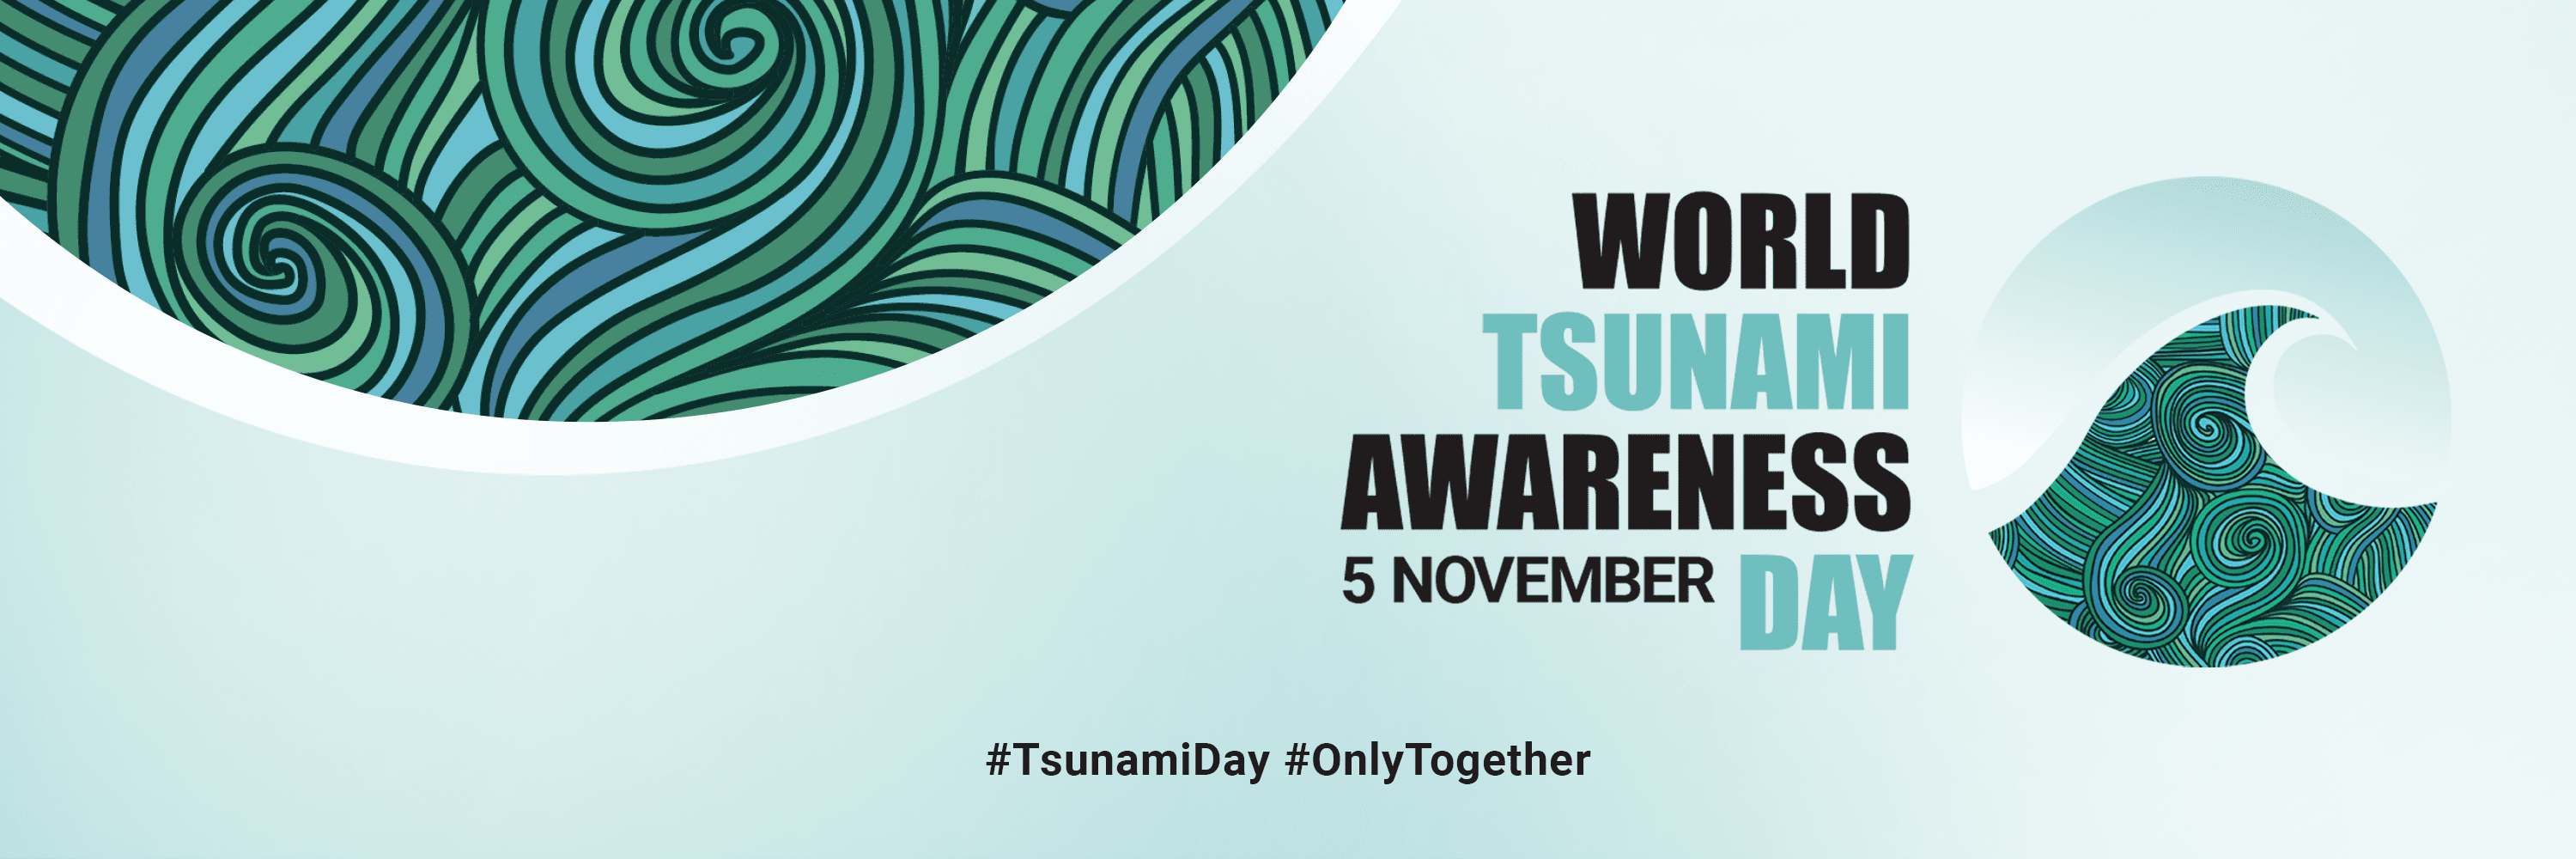 November 5th is World Tsunami Awareness Day